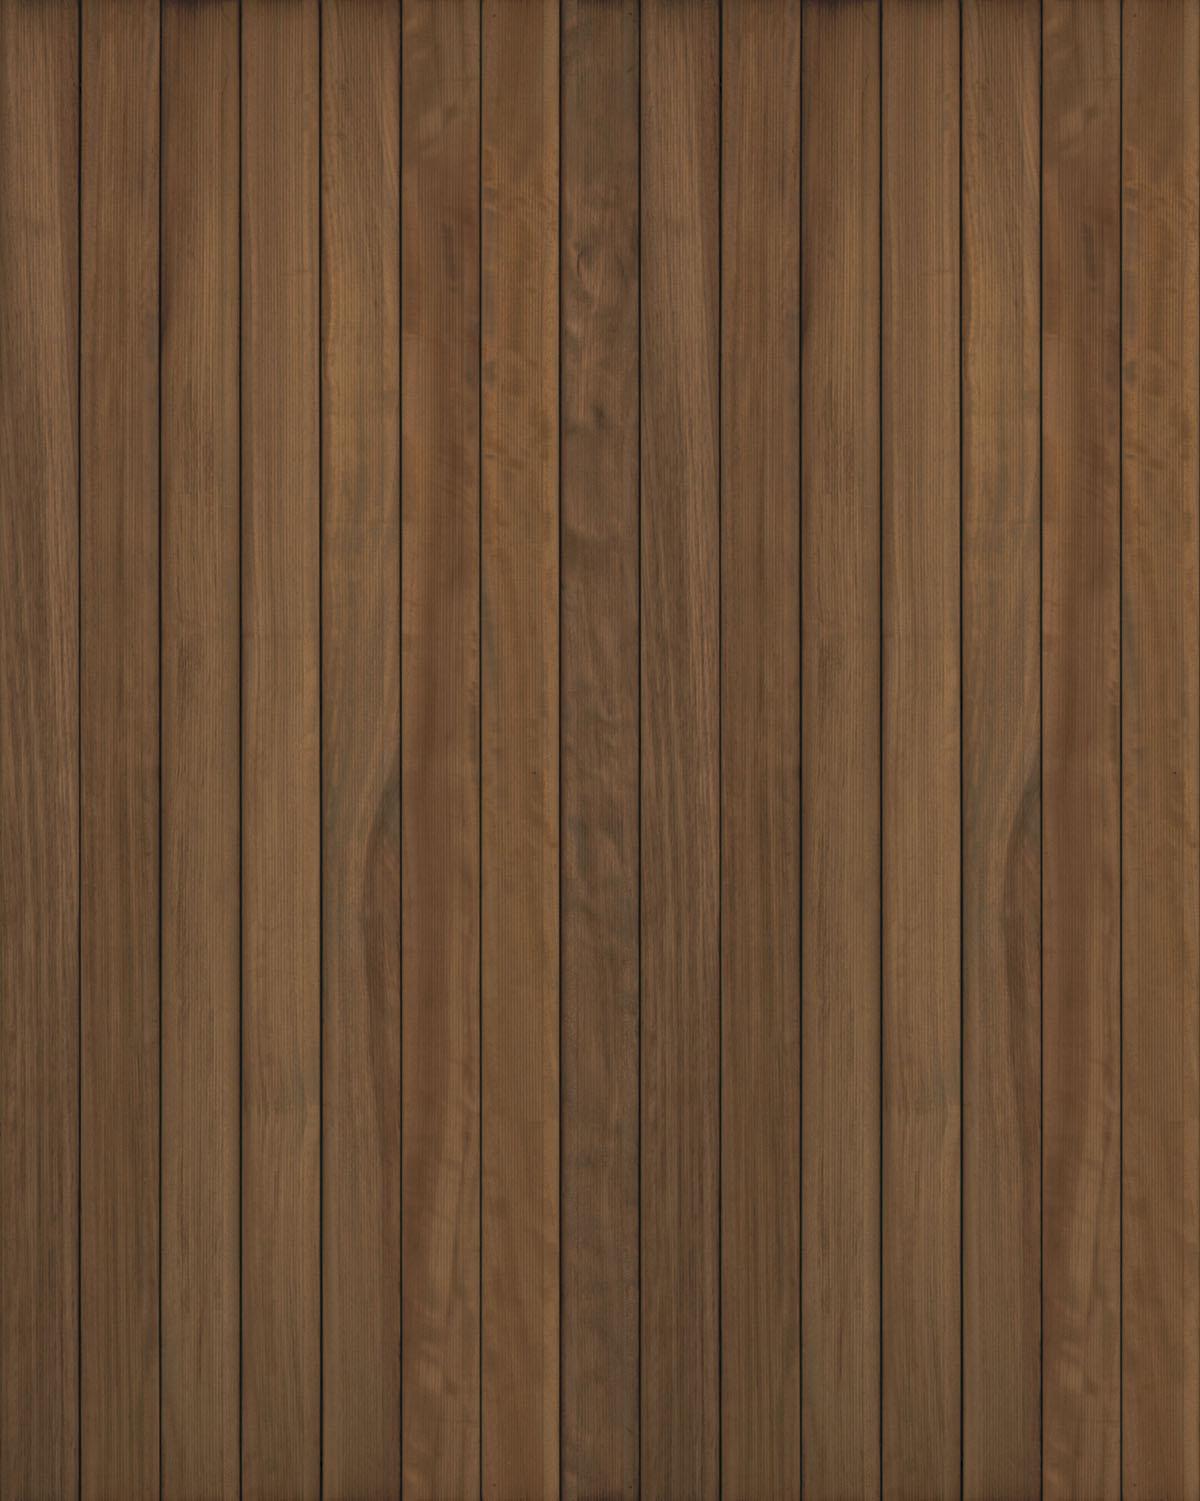 Terrasse En Bois Wood Deck Seamless Texture